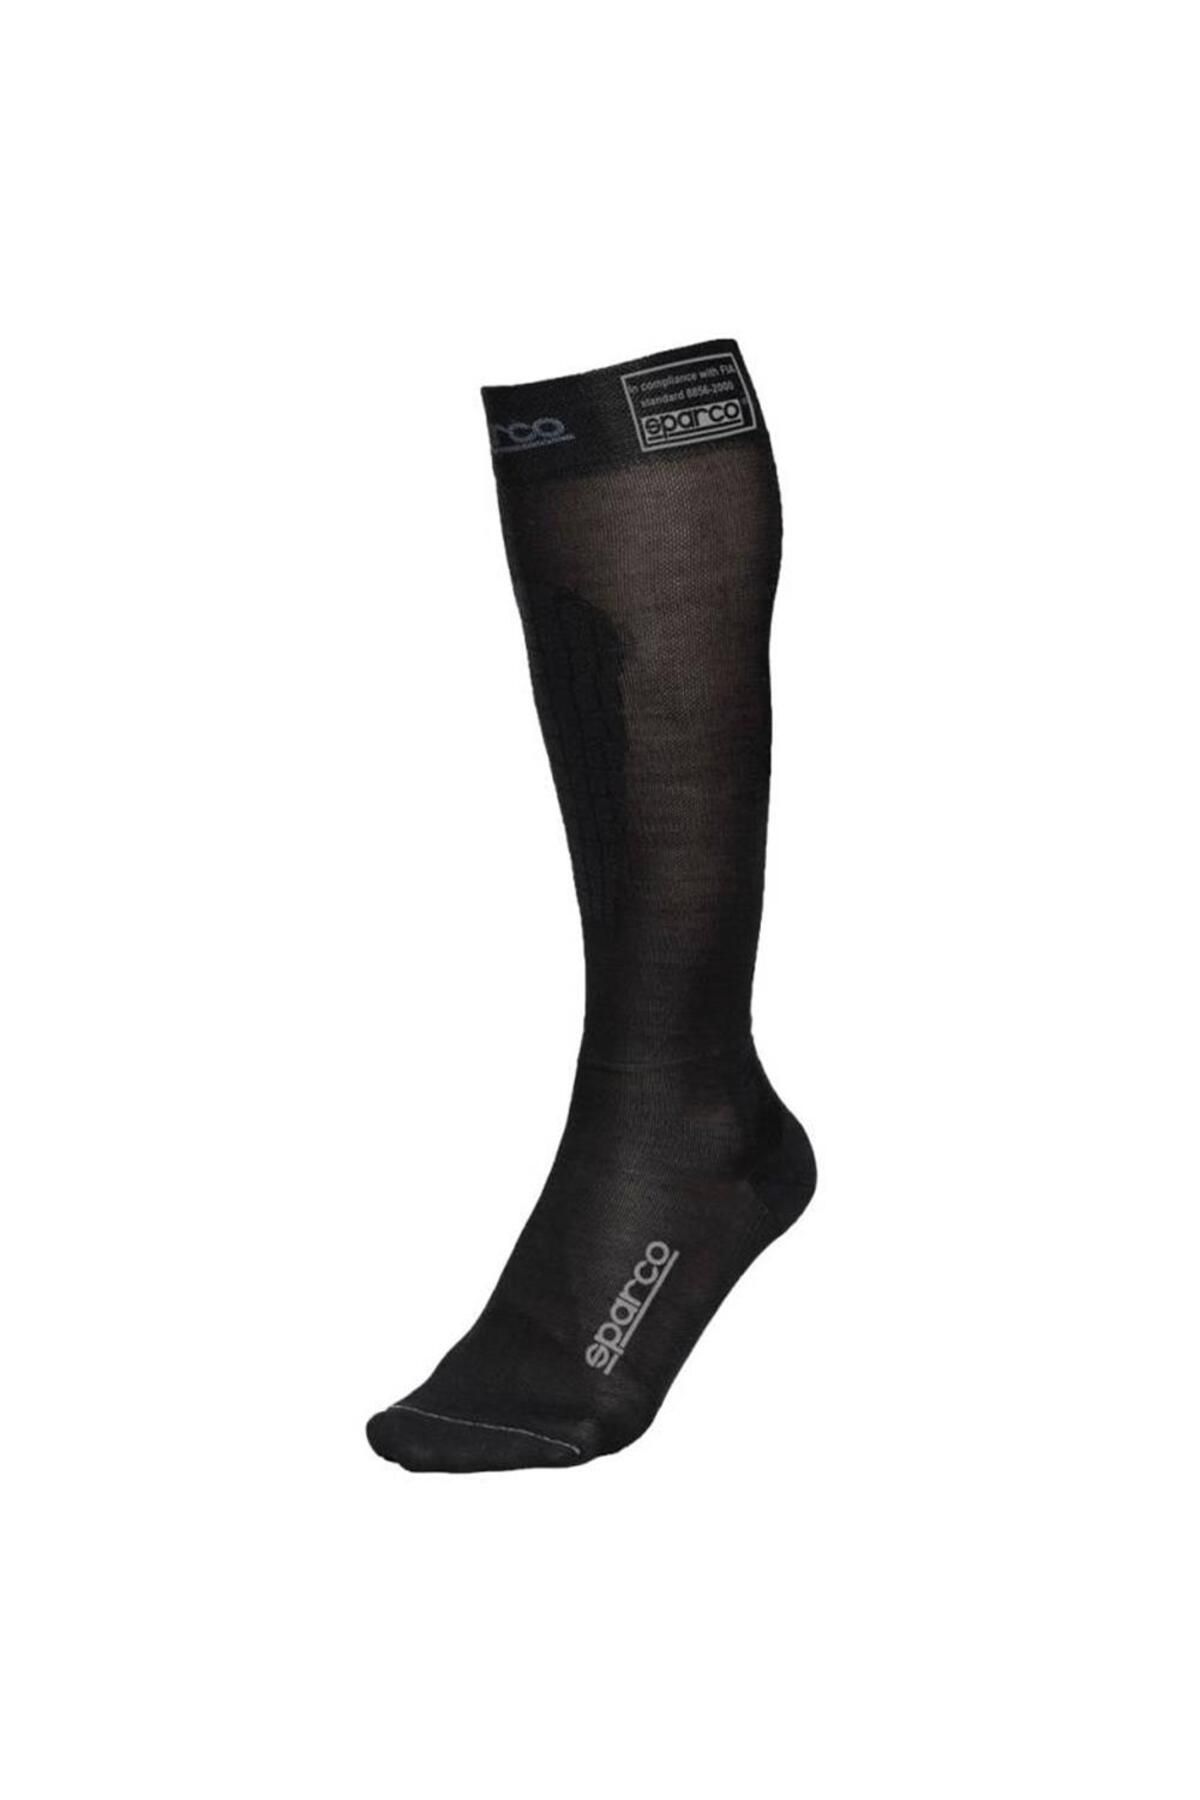 Sparco Rw-7 Çorap Fia Onaylı Siyah 46 Numara